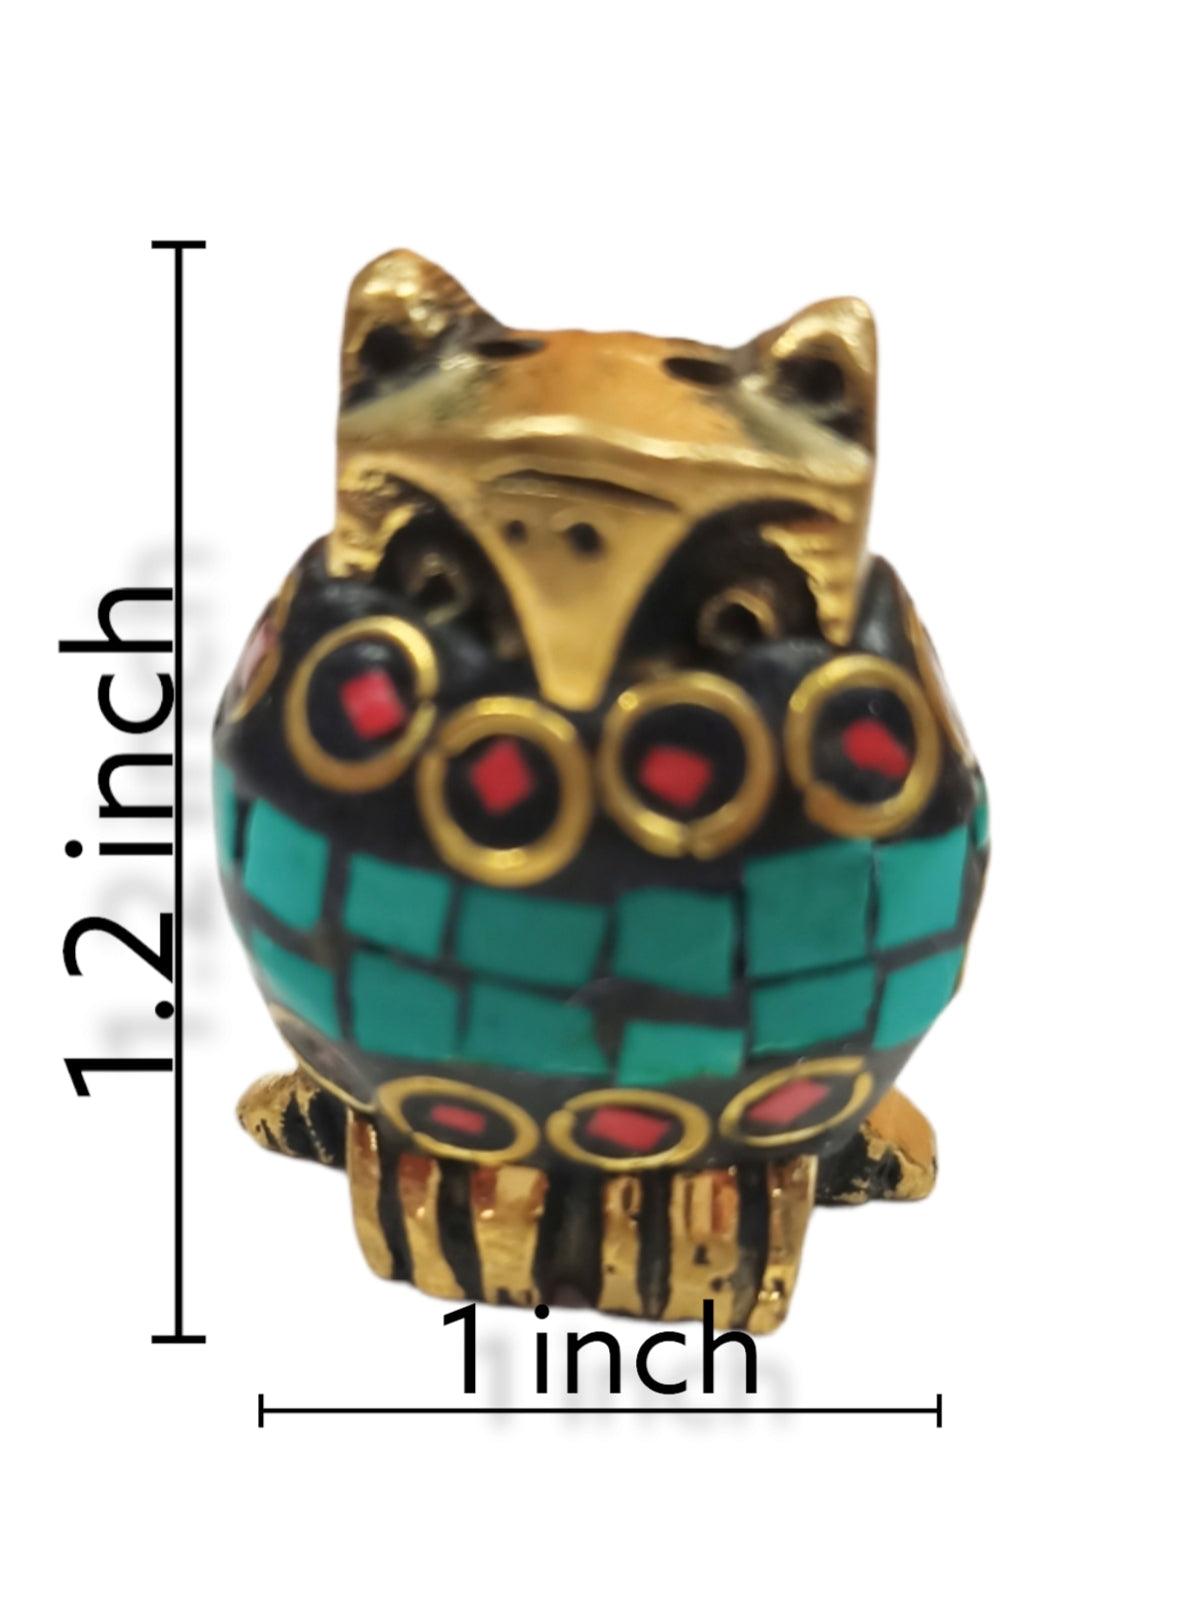 Brass Owl Incense holder | Incense Stick | Home Decor - ZANSKAR ARTS